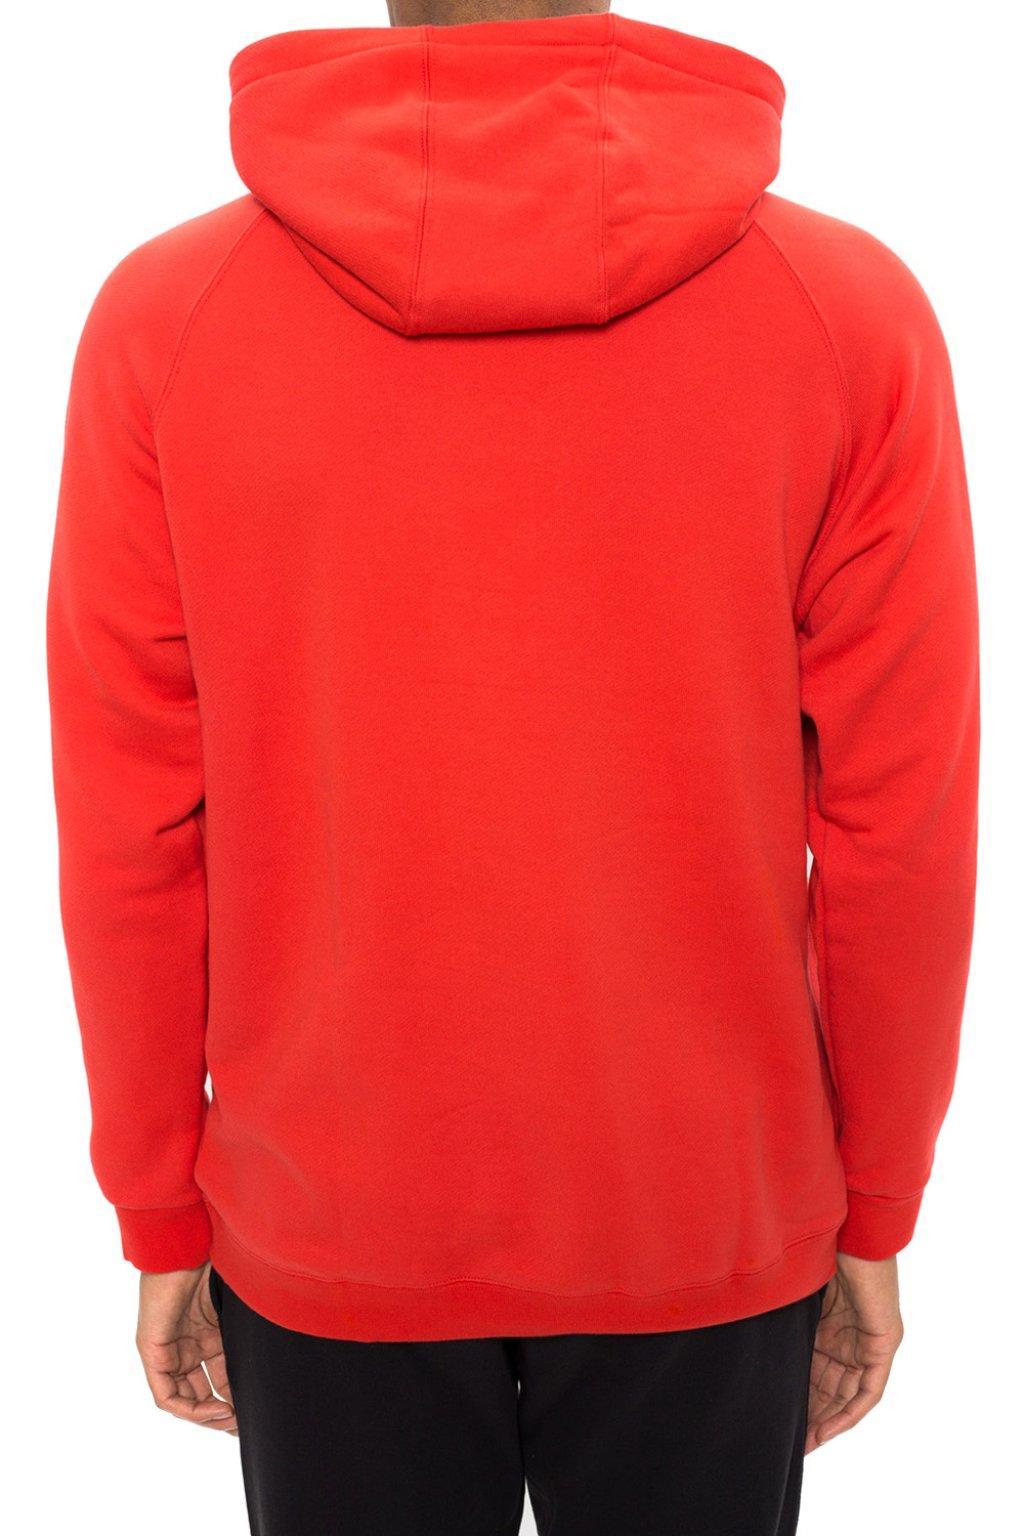 adidas Originals Cotton Logo Hoodie in Red for Men - Lyst